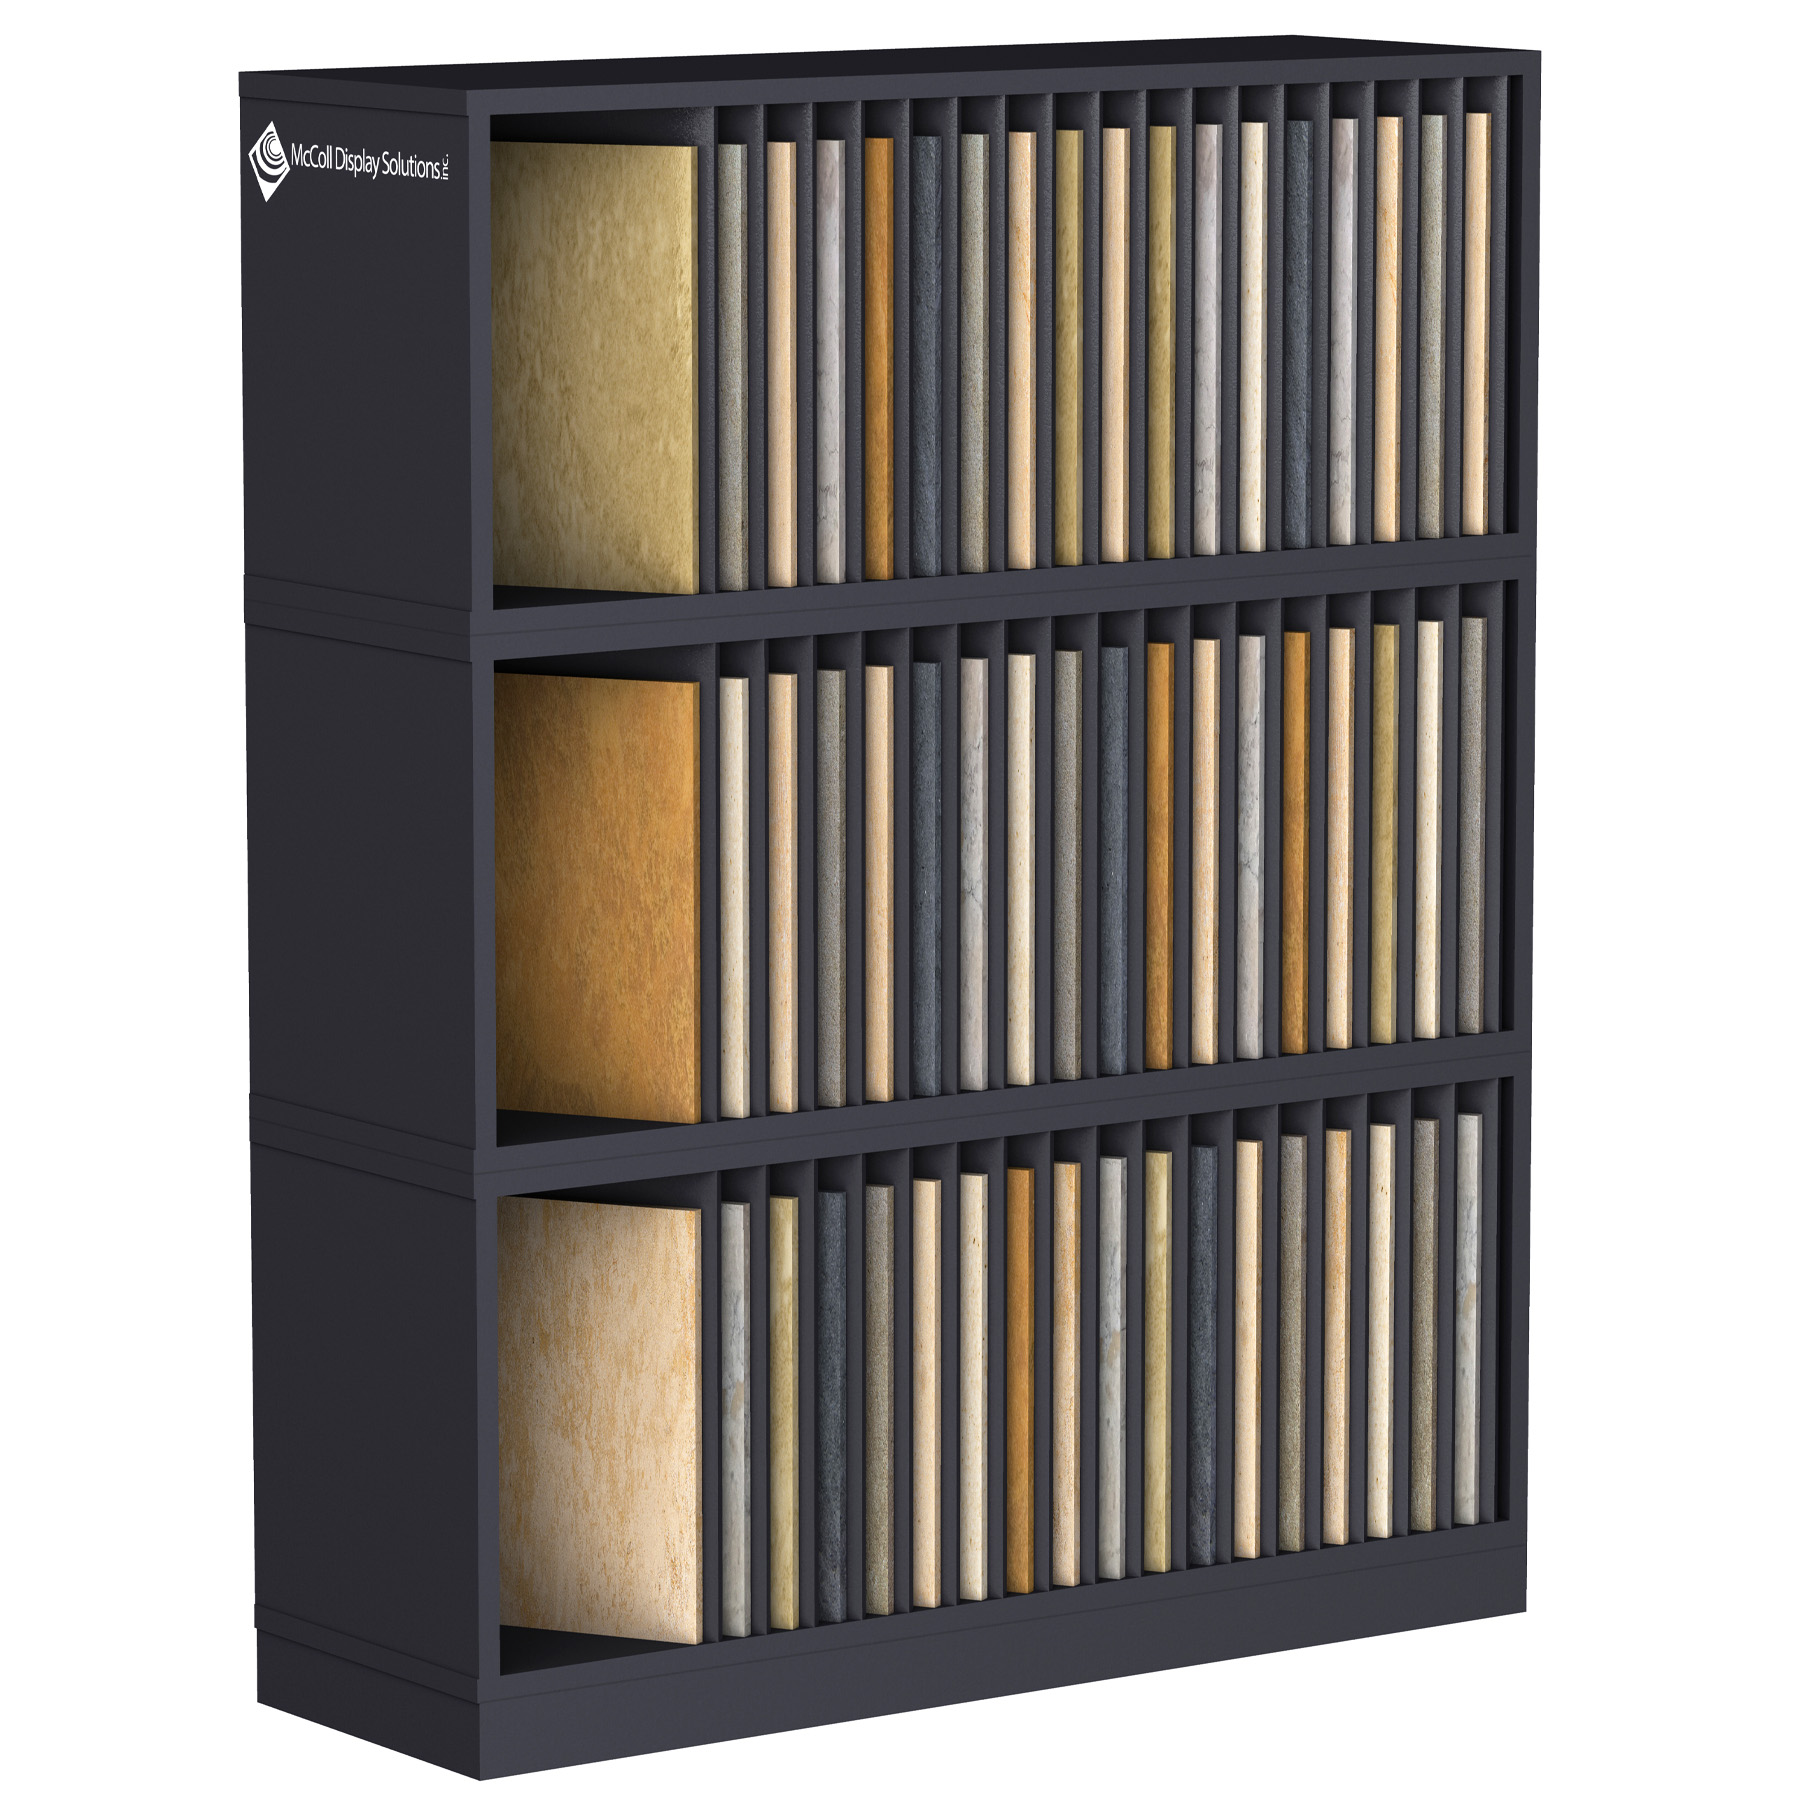 McHandy Racks Vertical Shelving System Towers Cabinets Displays Ceramic Tile Stone Granite Quartz Hardwood Flooring Samples and Sample Boards